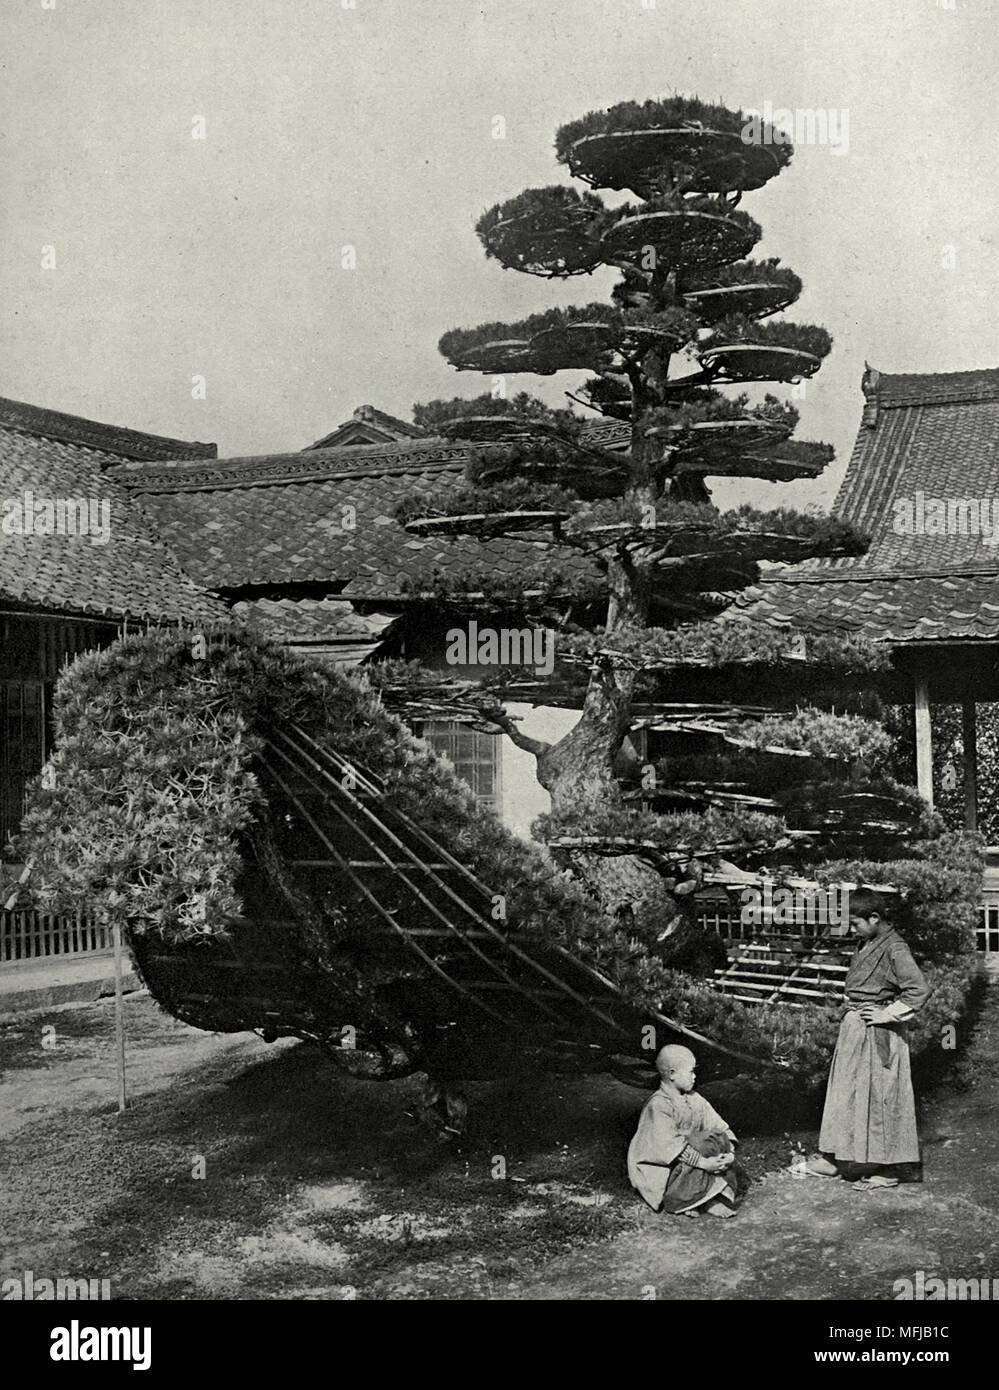 The Pine Tree Junk at Kinkakuji, Japan, circa 1910 Stock Photo